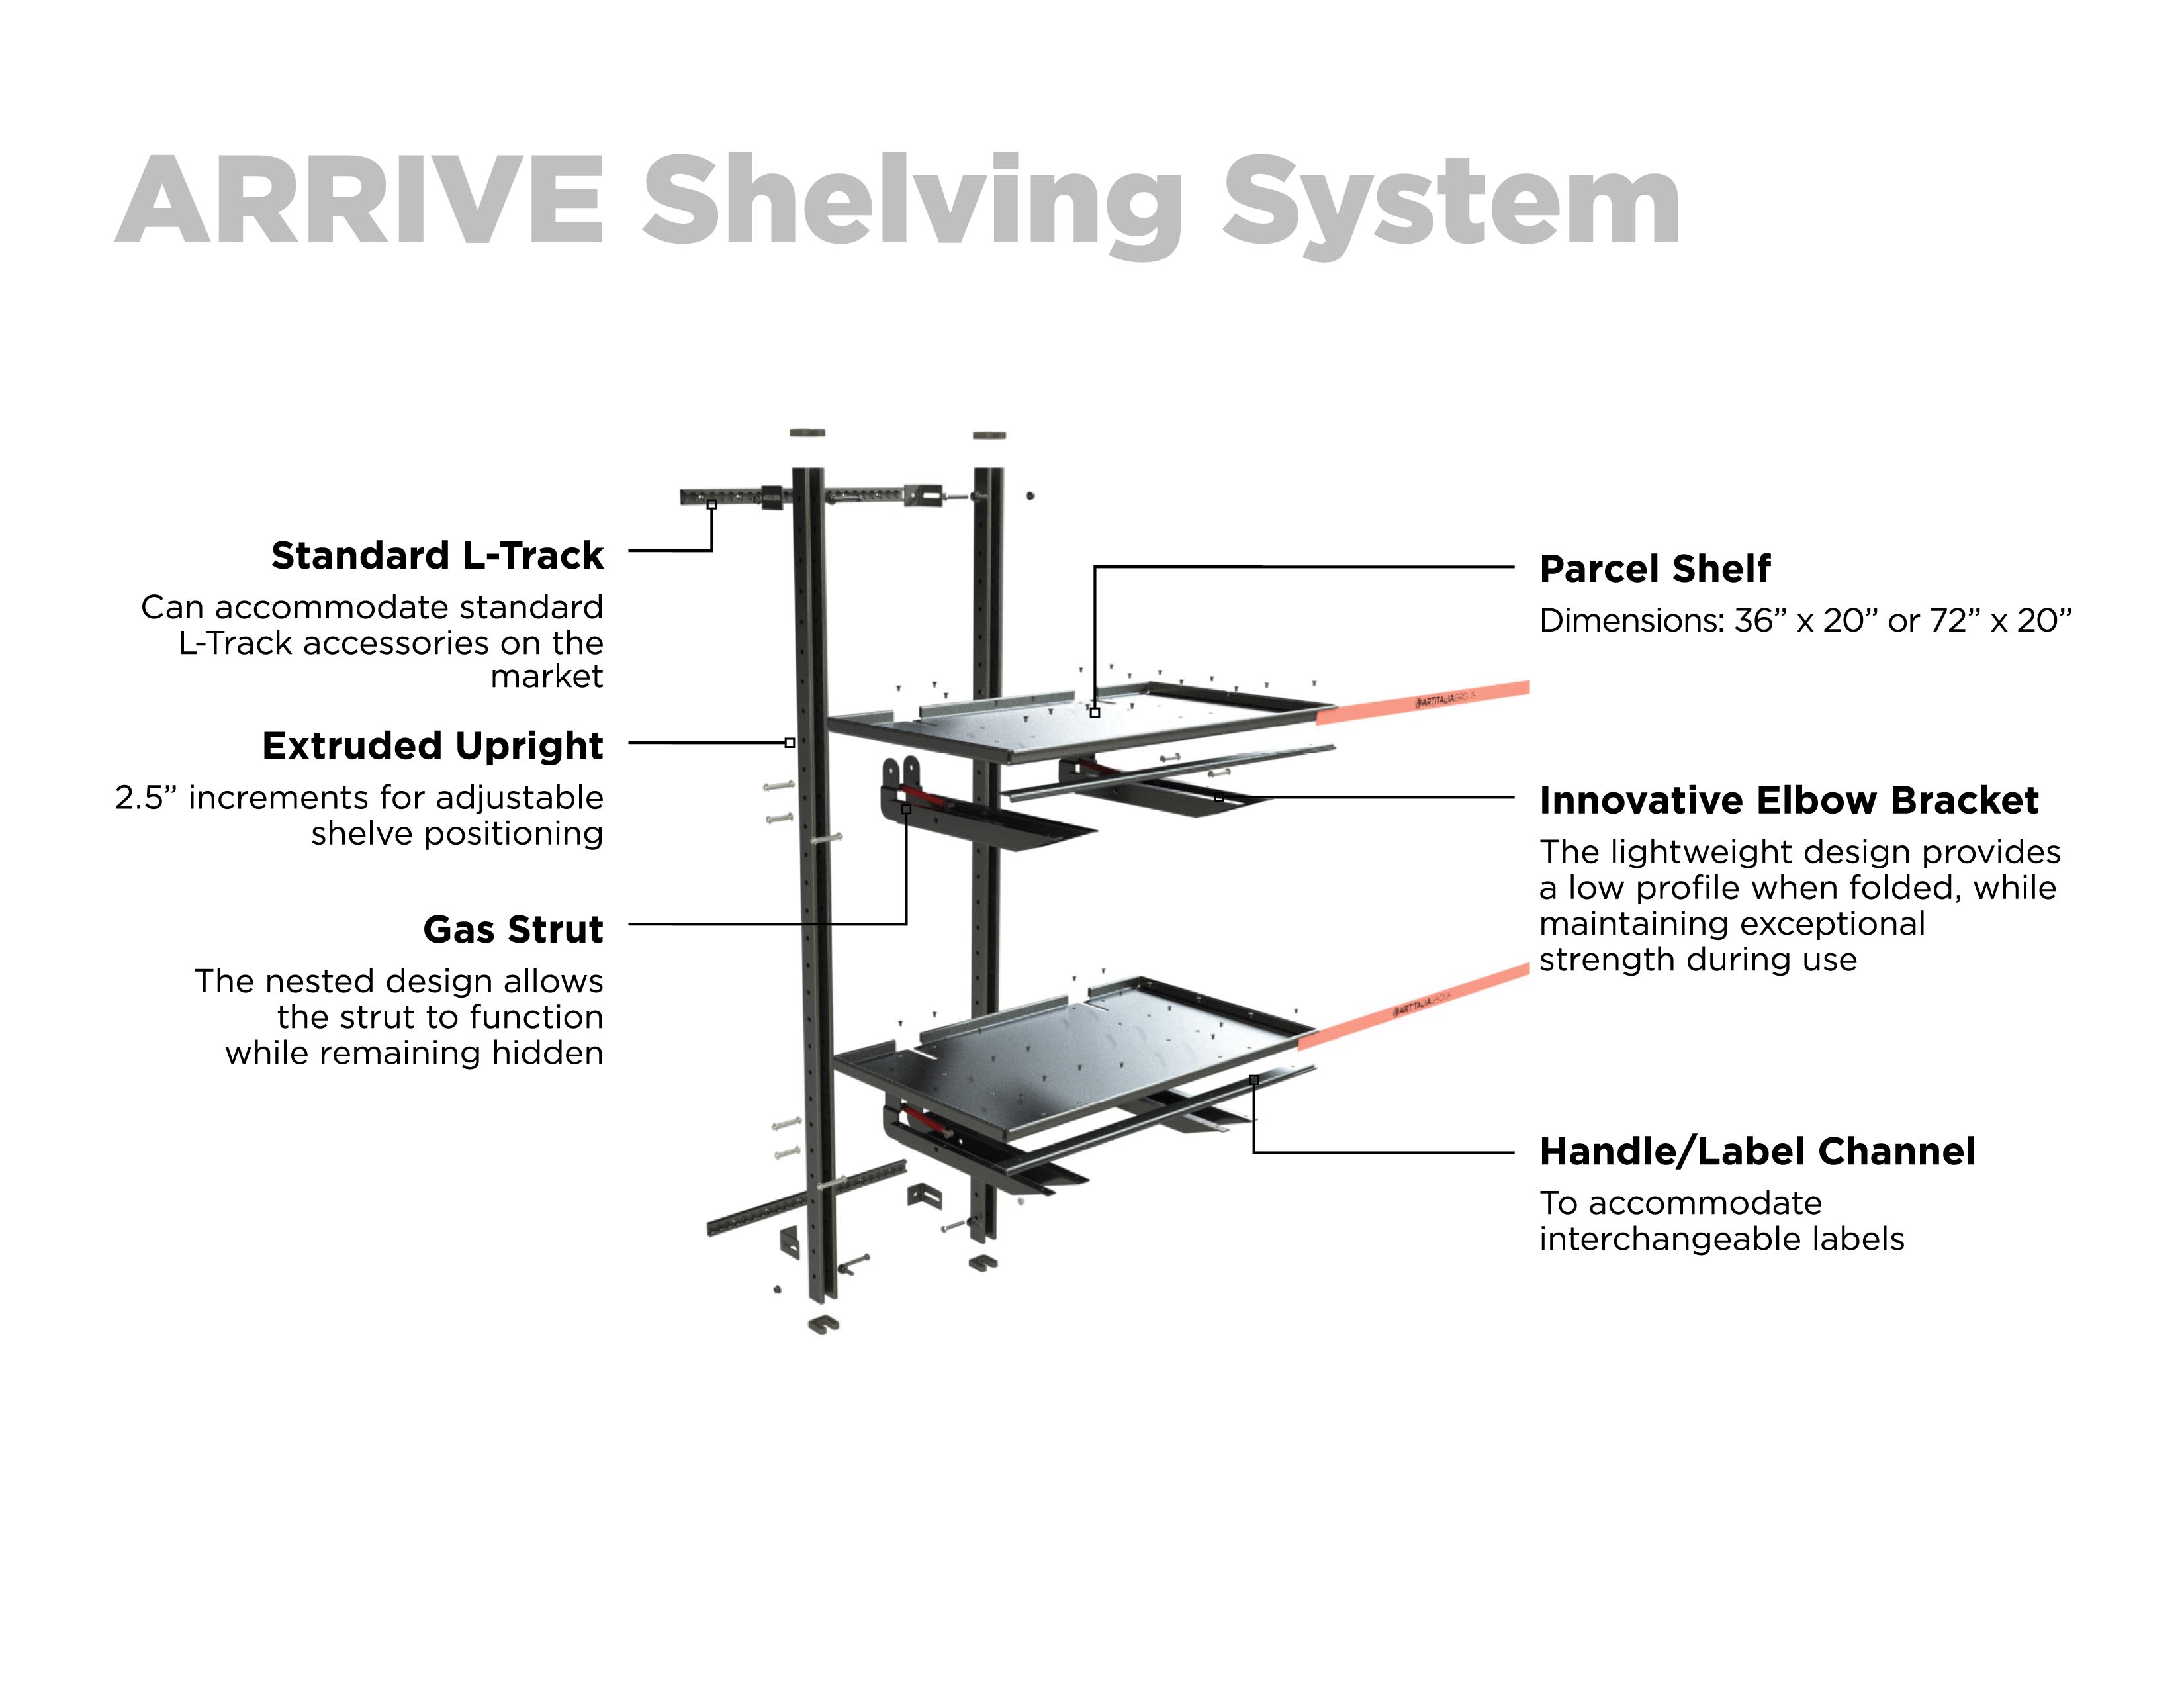 Arrive Shelving System - Material Handling Solutions - Material Handling Equipment - Material Handling - Shipping and Handling - Shelving Solutions